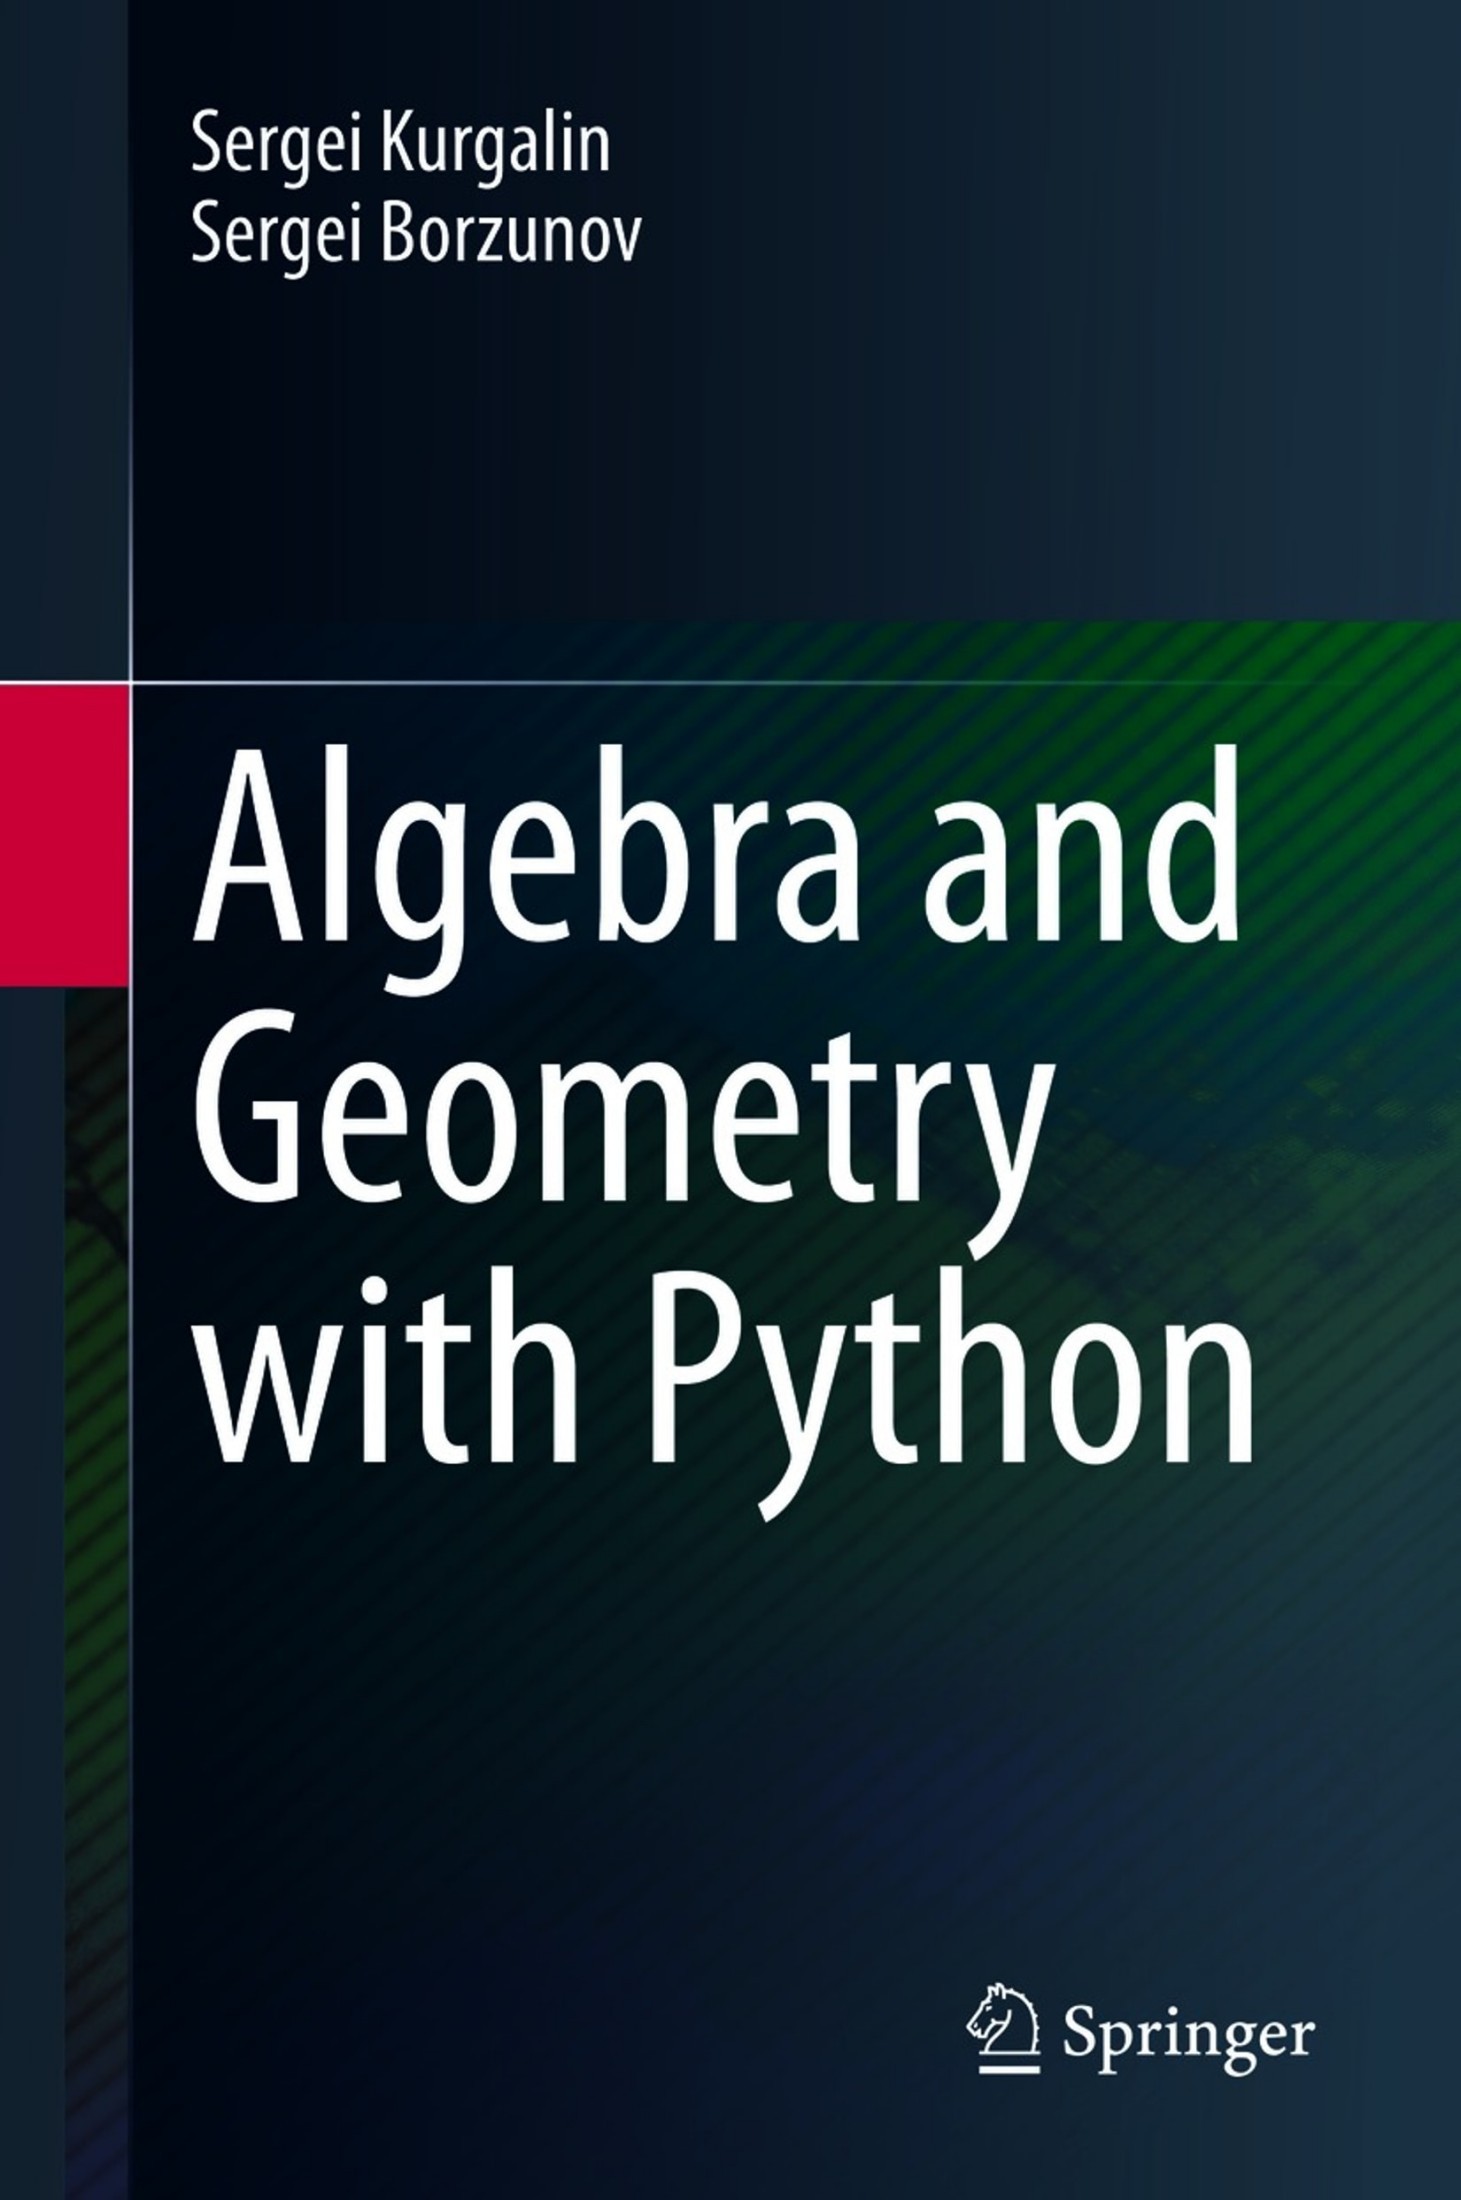 Algebra and Geometry With Python